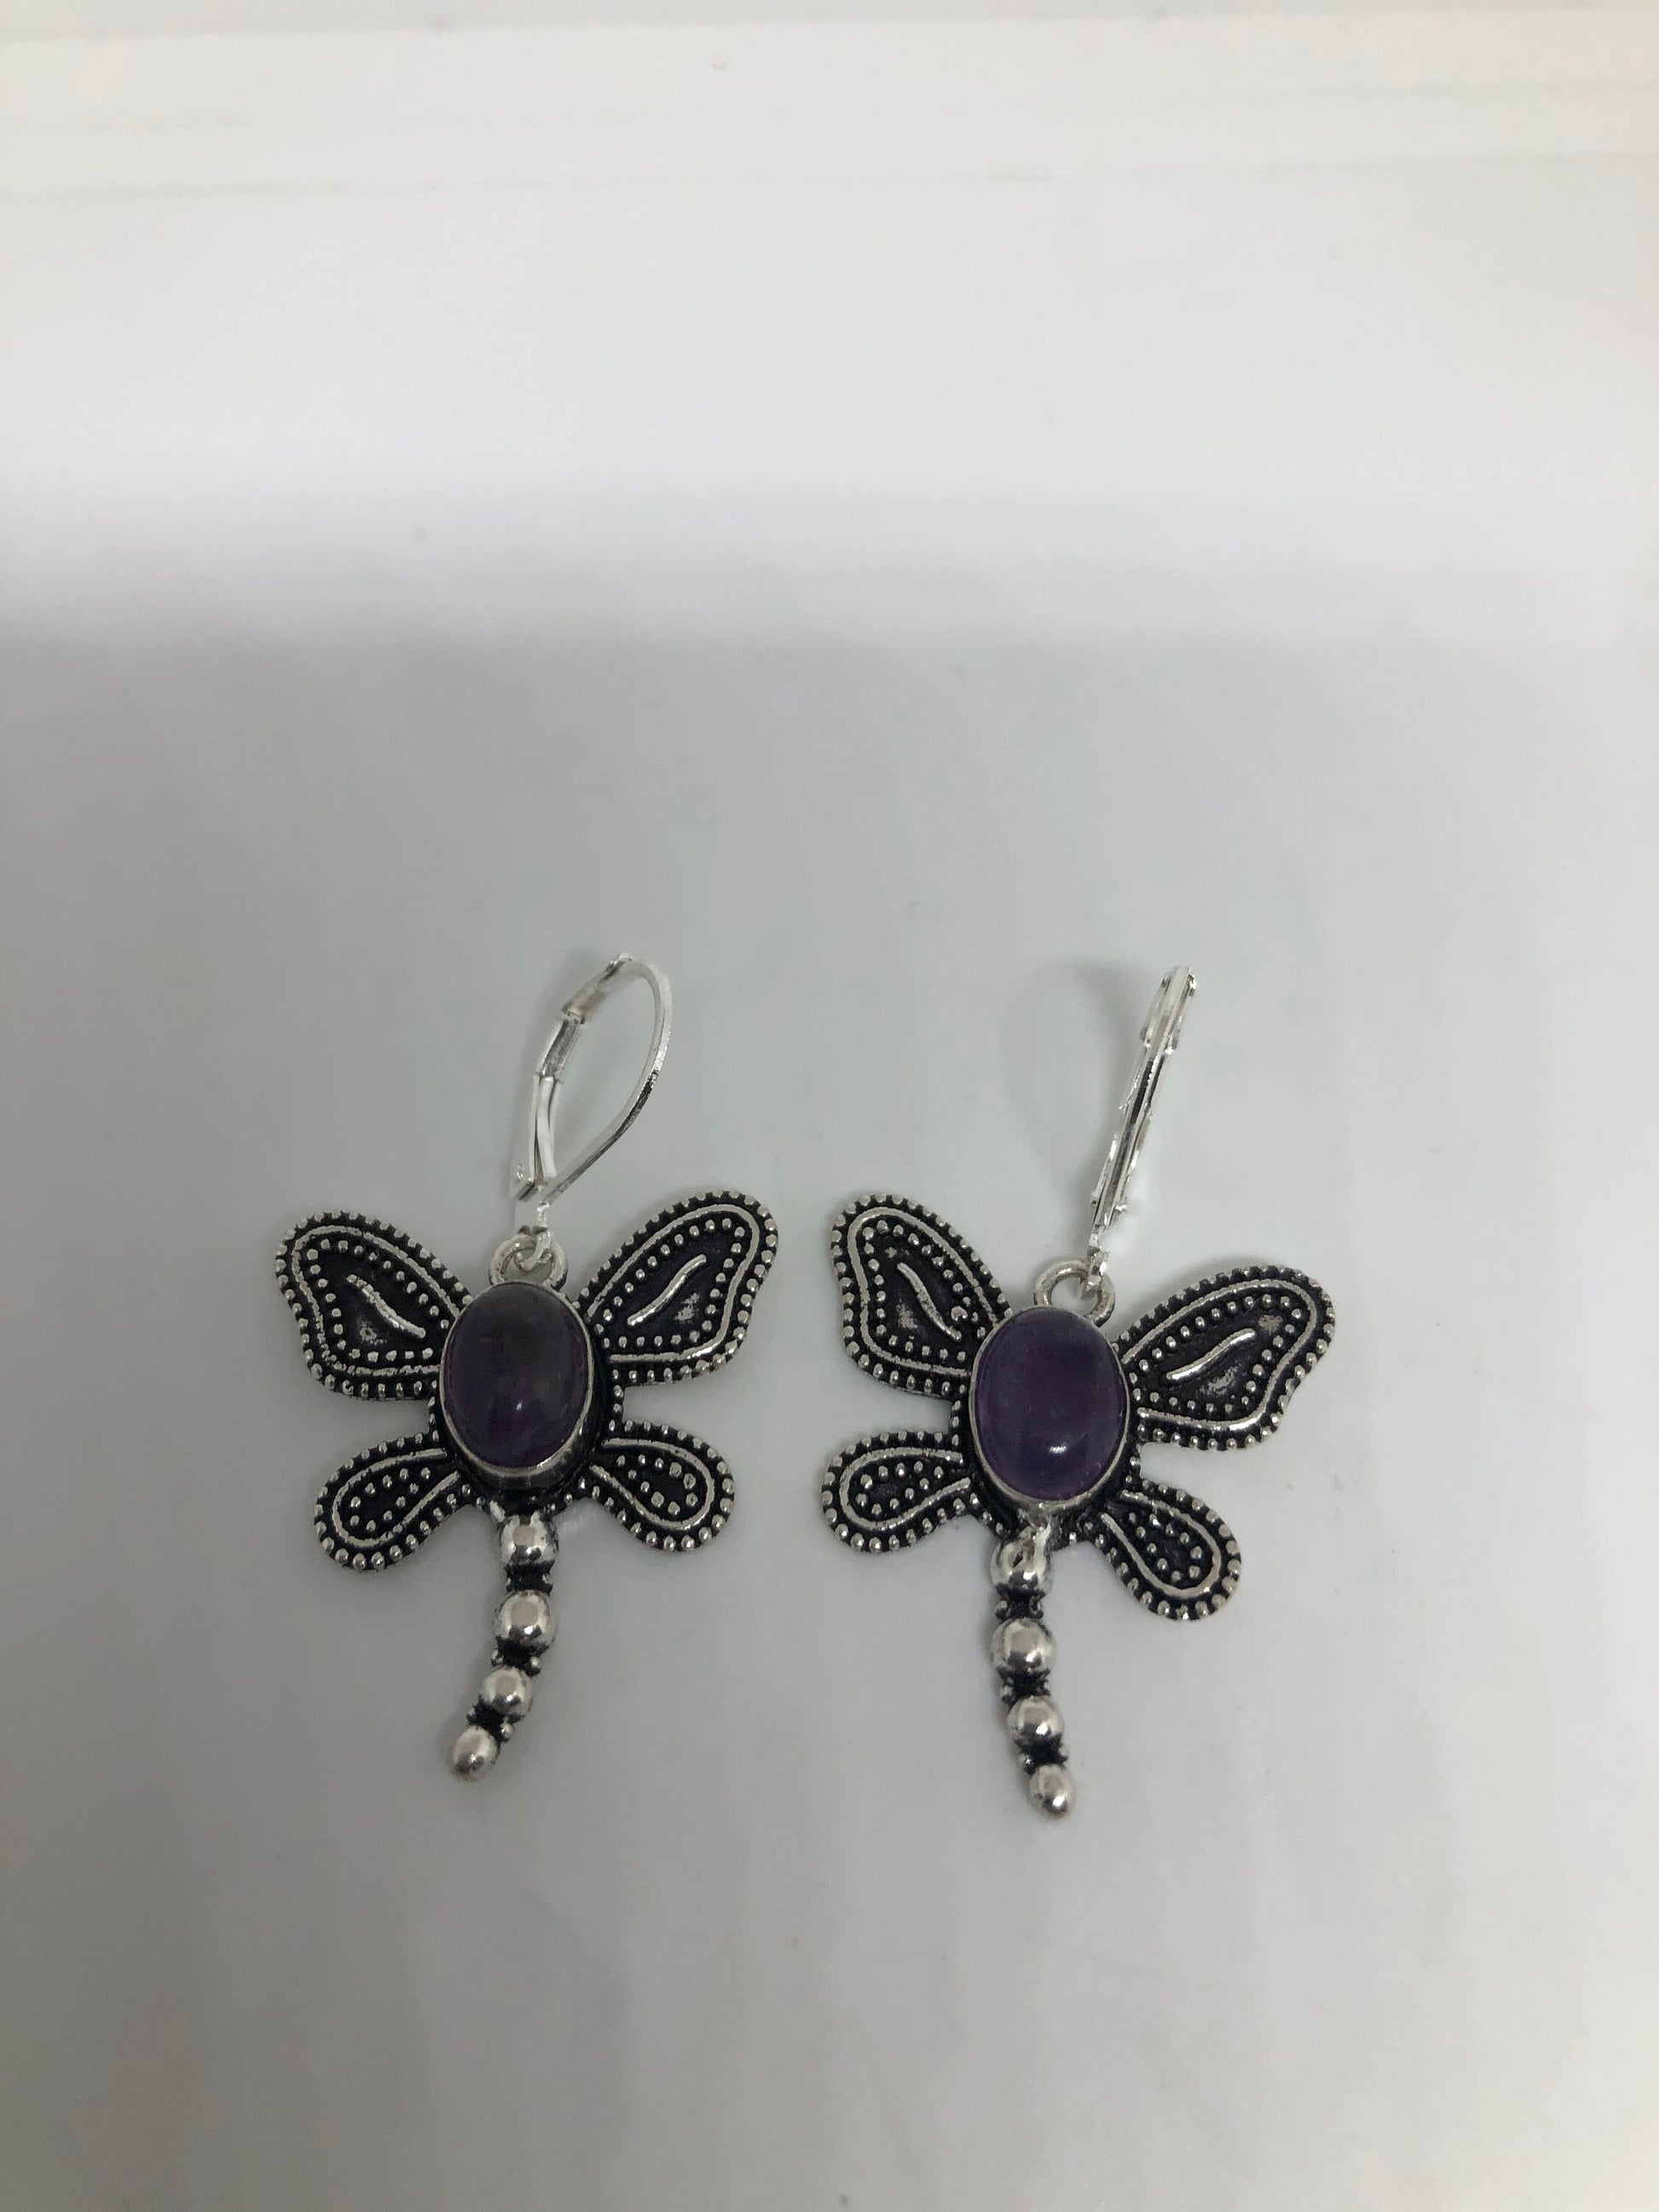 Vintage Purple Amethyst Lever Back Earrings 925 Sterling Silver Chandelier Dragonfly